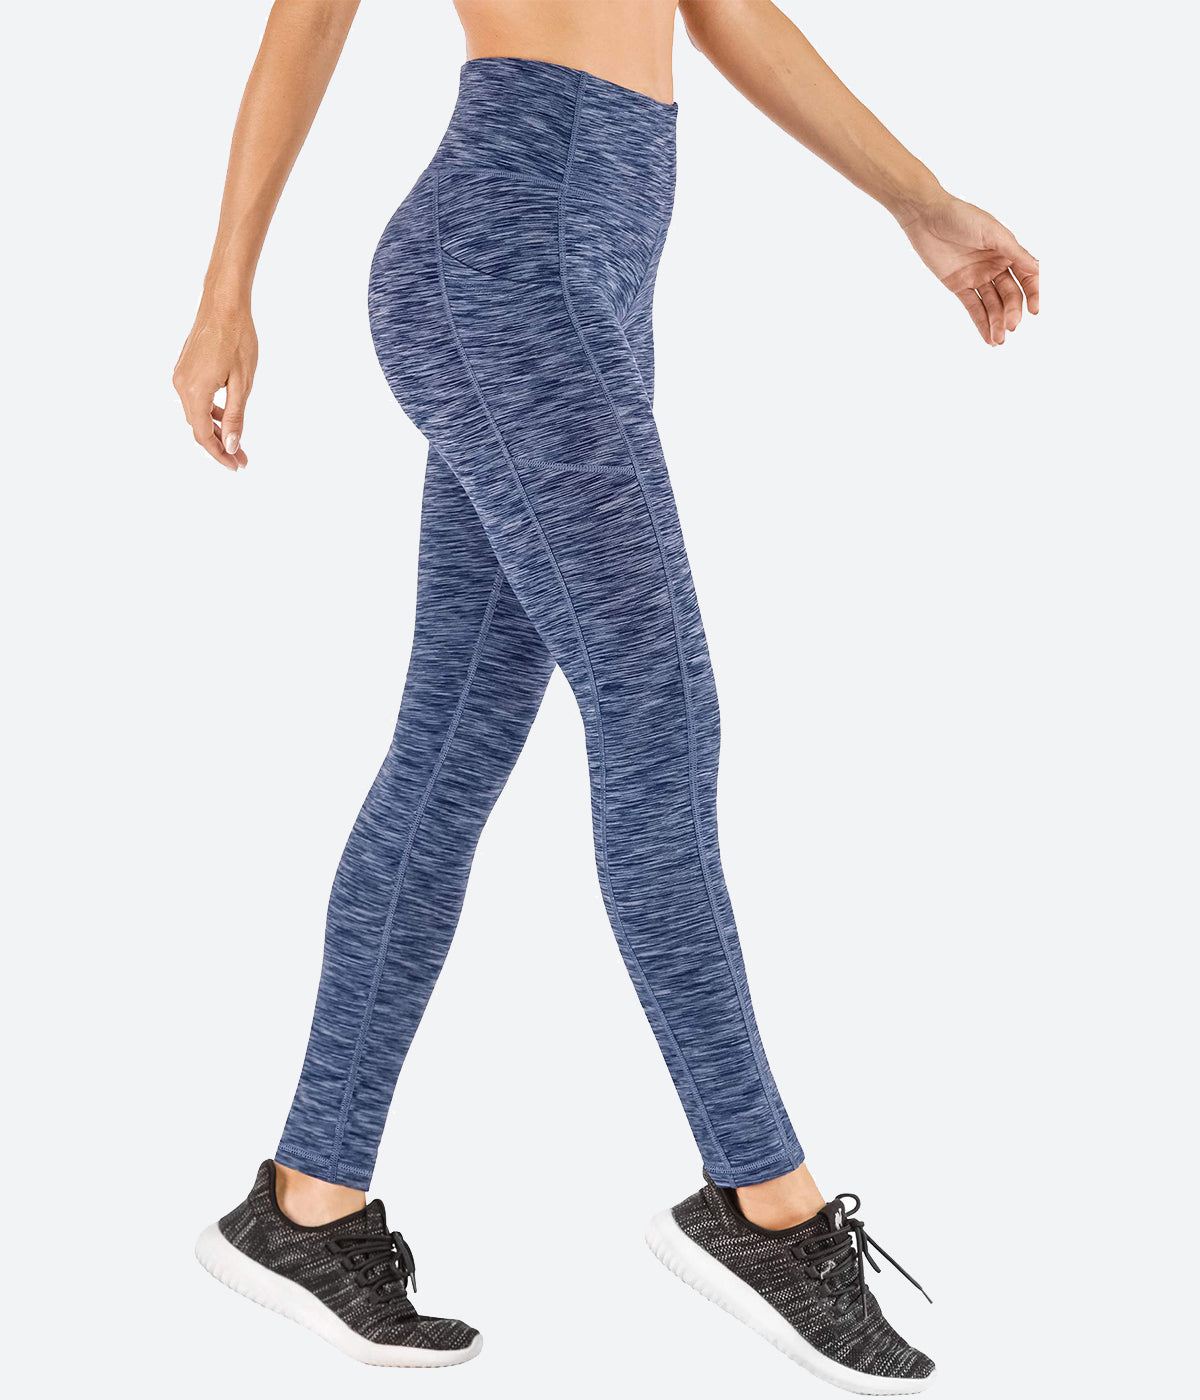 High Waist Yoga Pants with Pockets - HY40